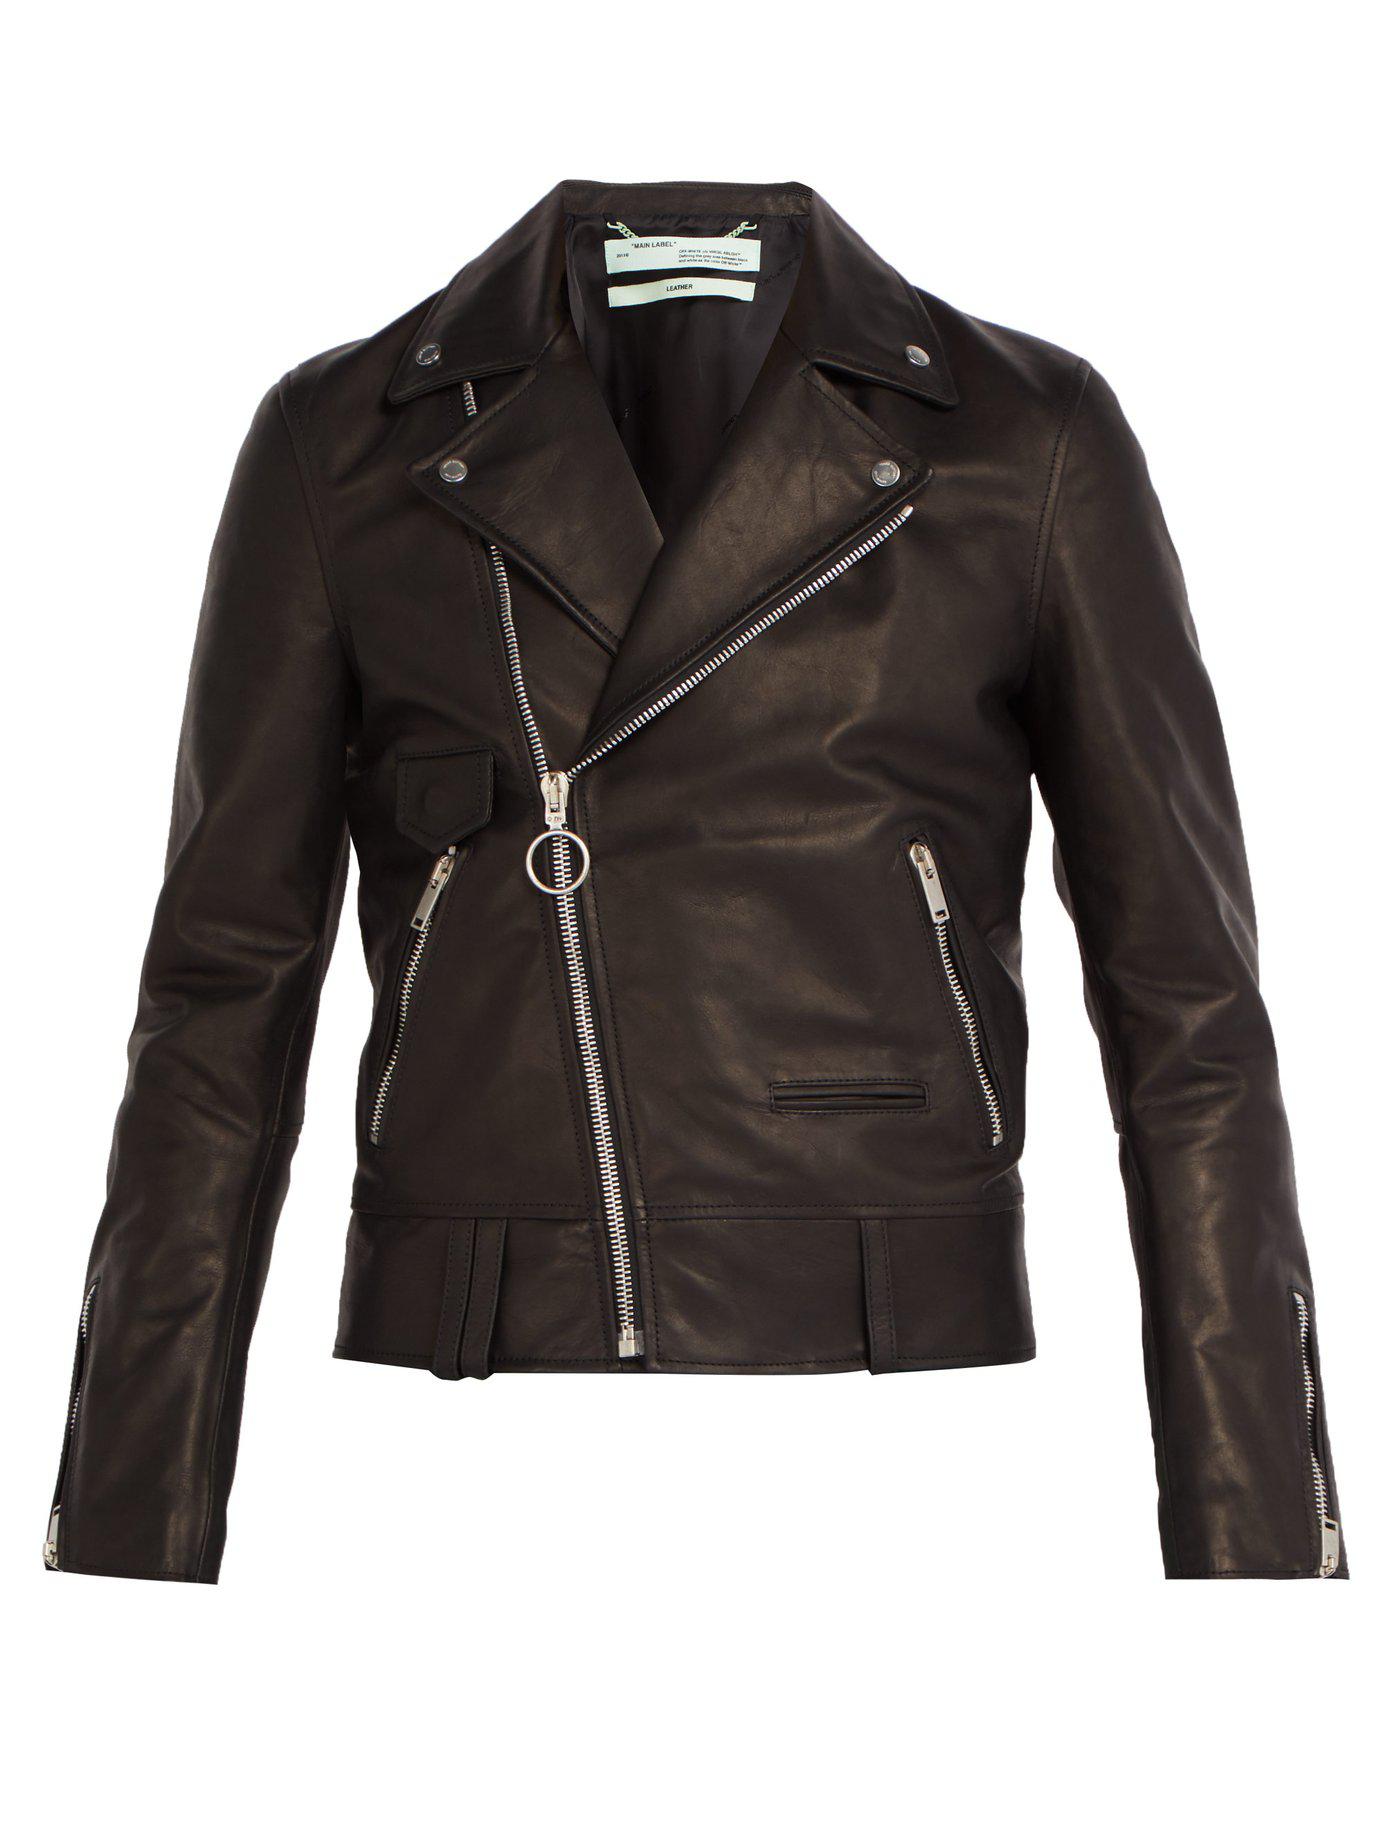 Off-White c/o Virgil Abloh Men's Leather Biker Jacket in Black for 